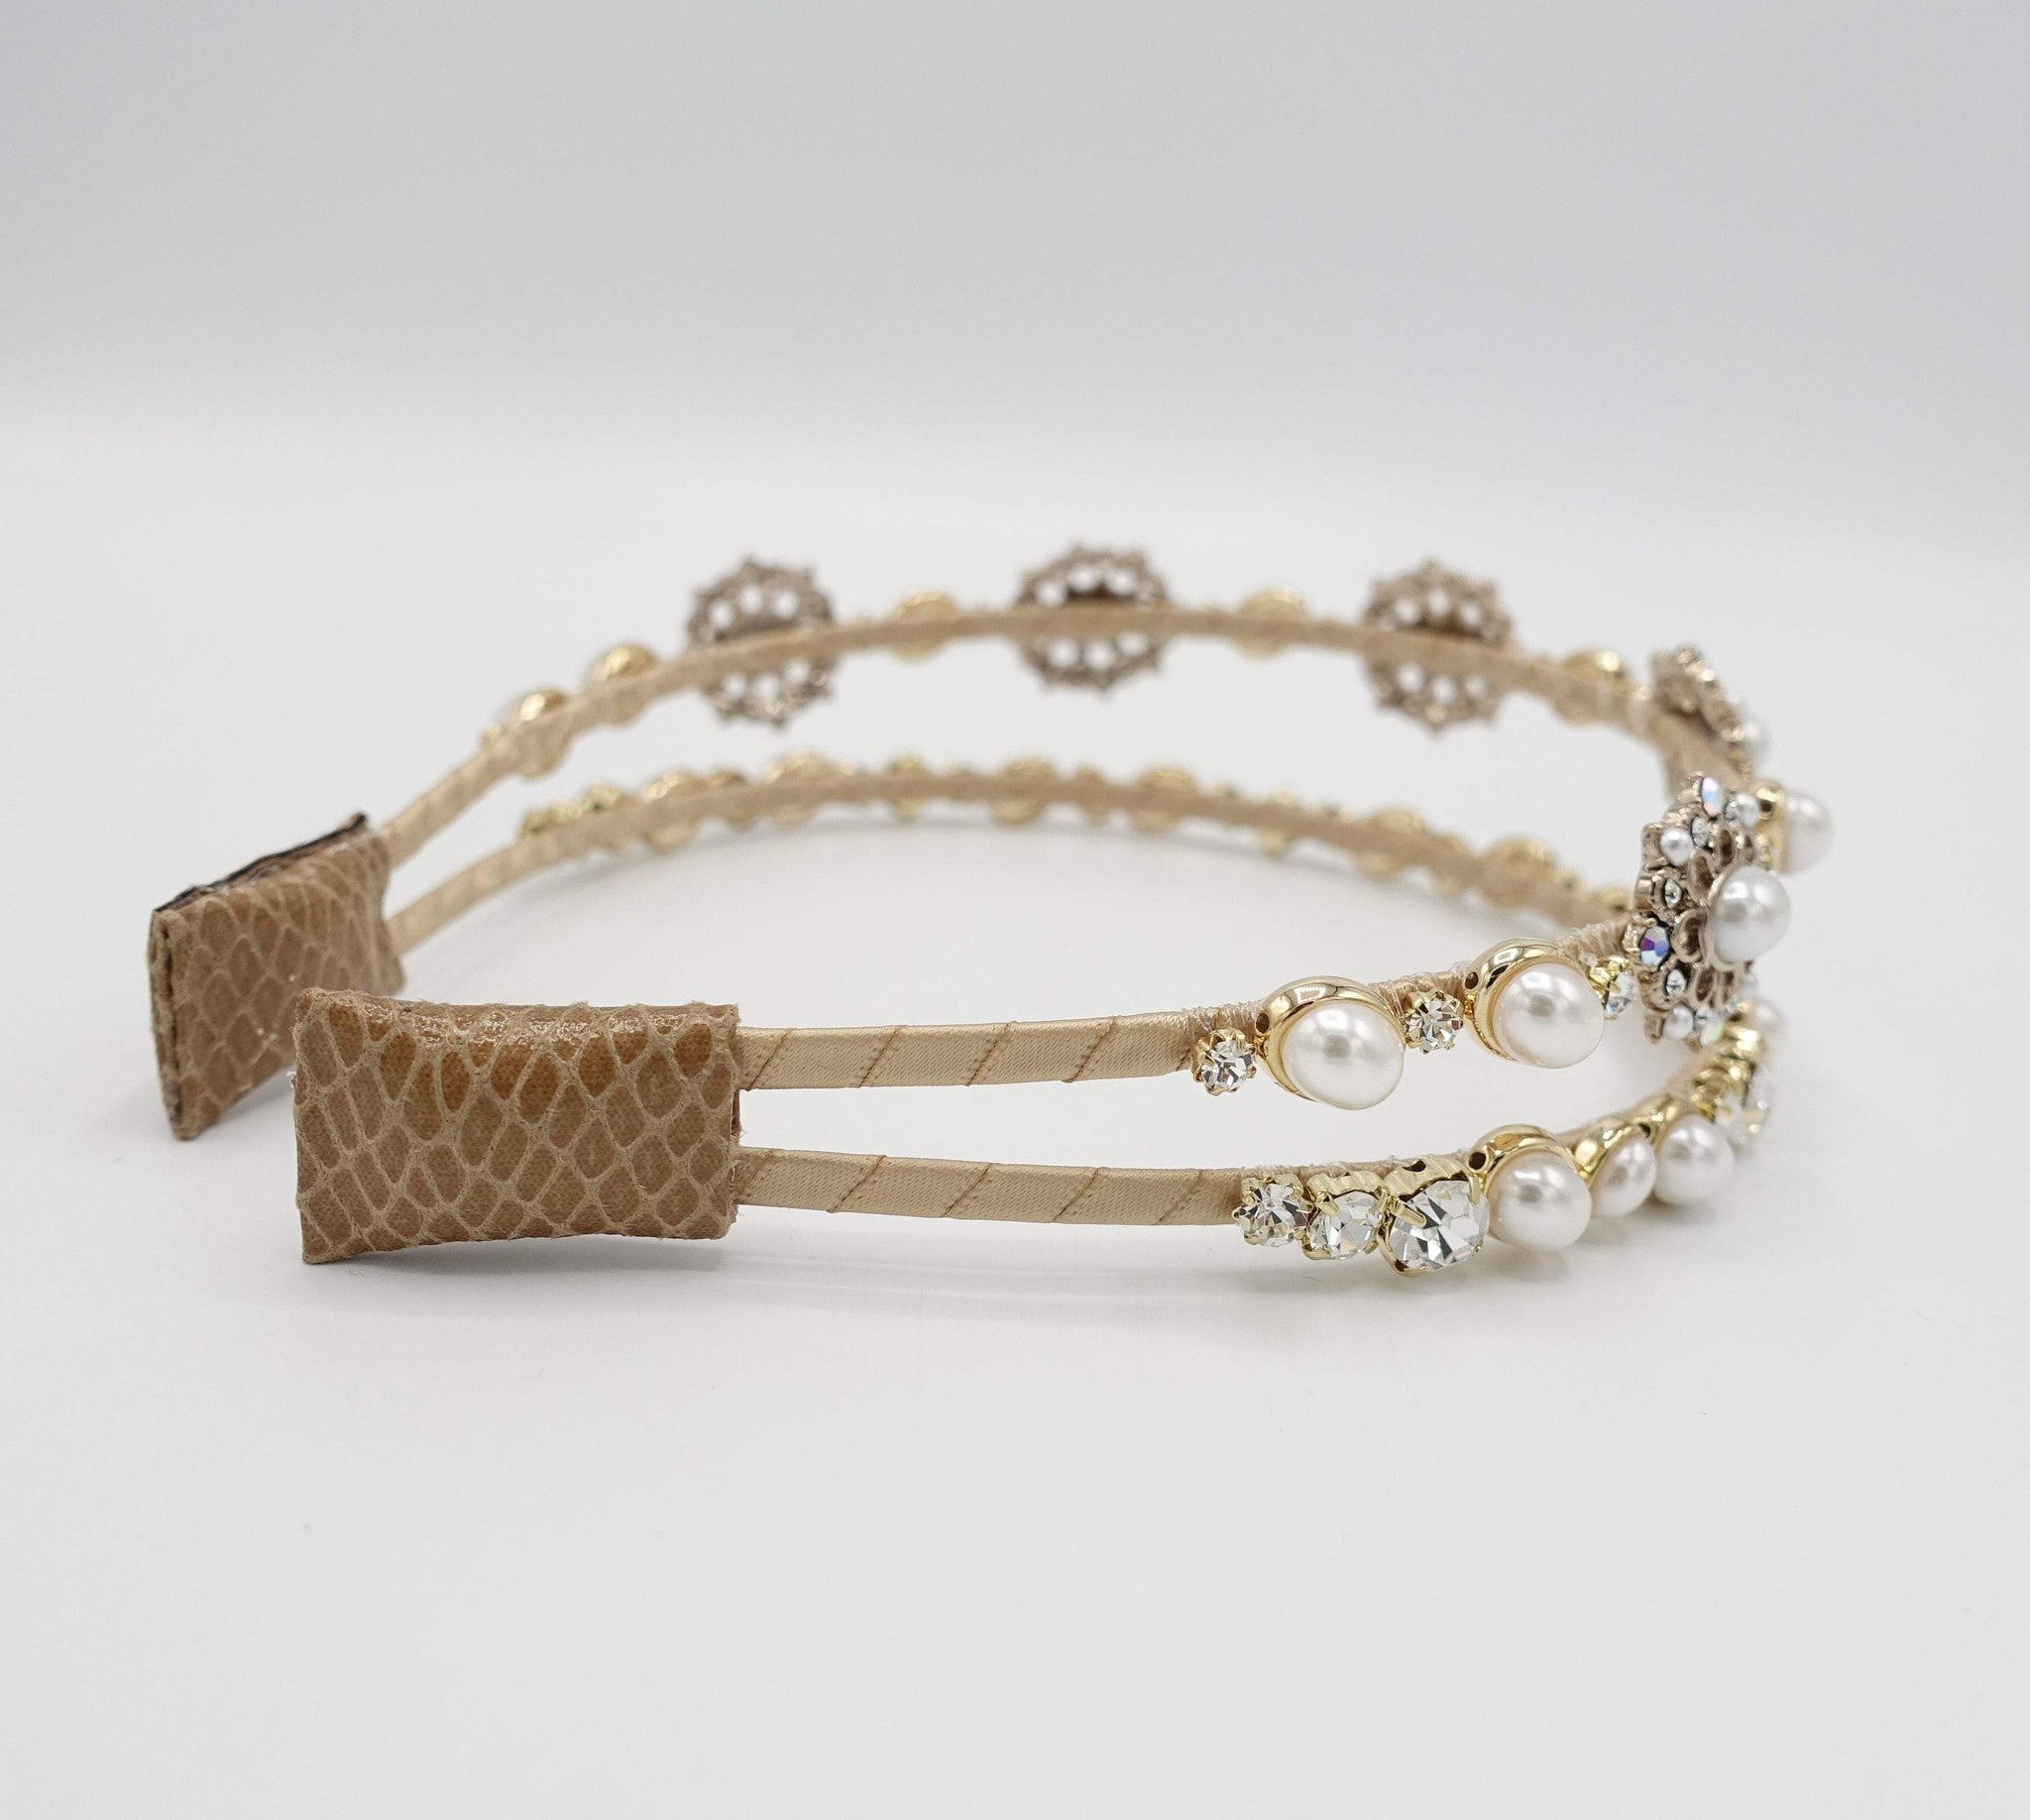 VeryShine pearl rhinestone double headband antique style jewel hairband for women